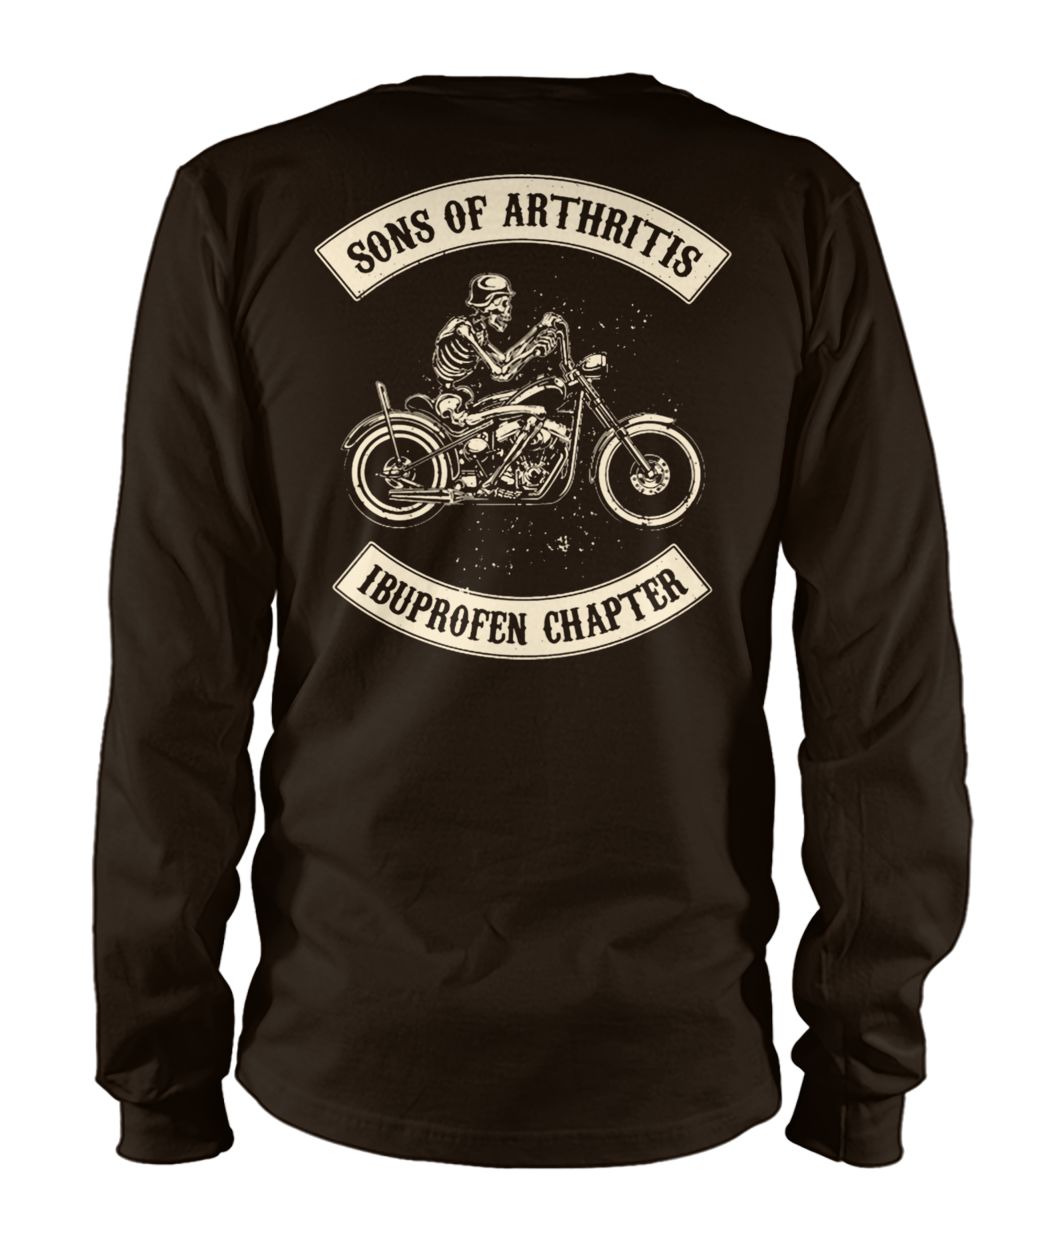 Sons of arthritis ibuprofen chapter biker unisex long sleeve